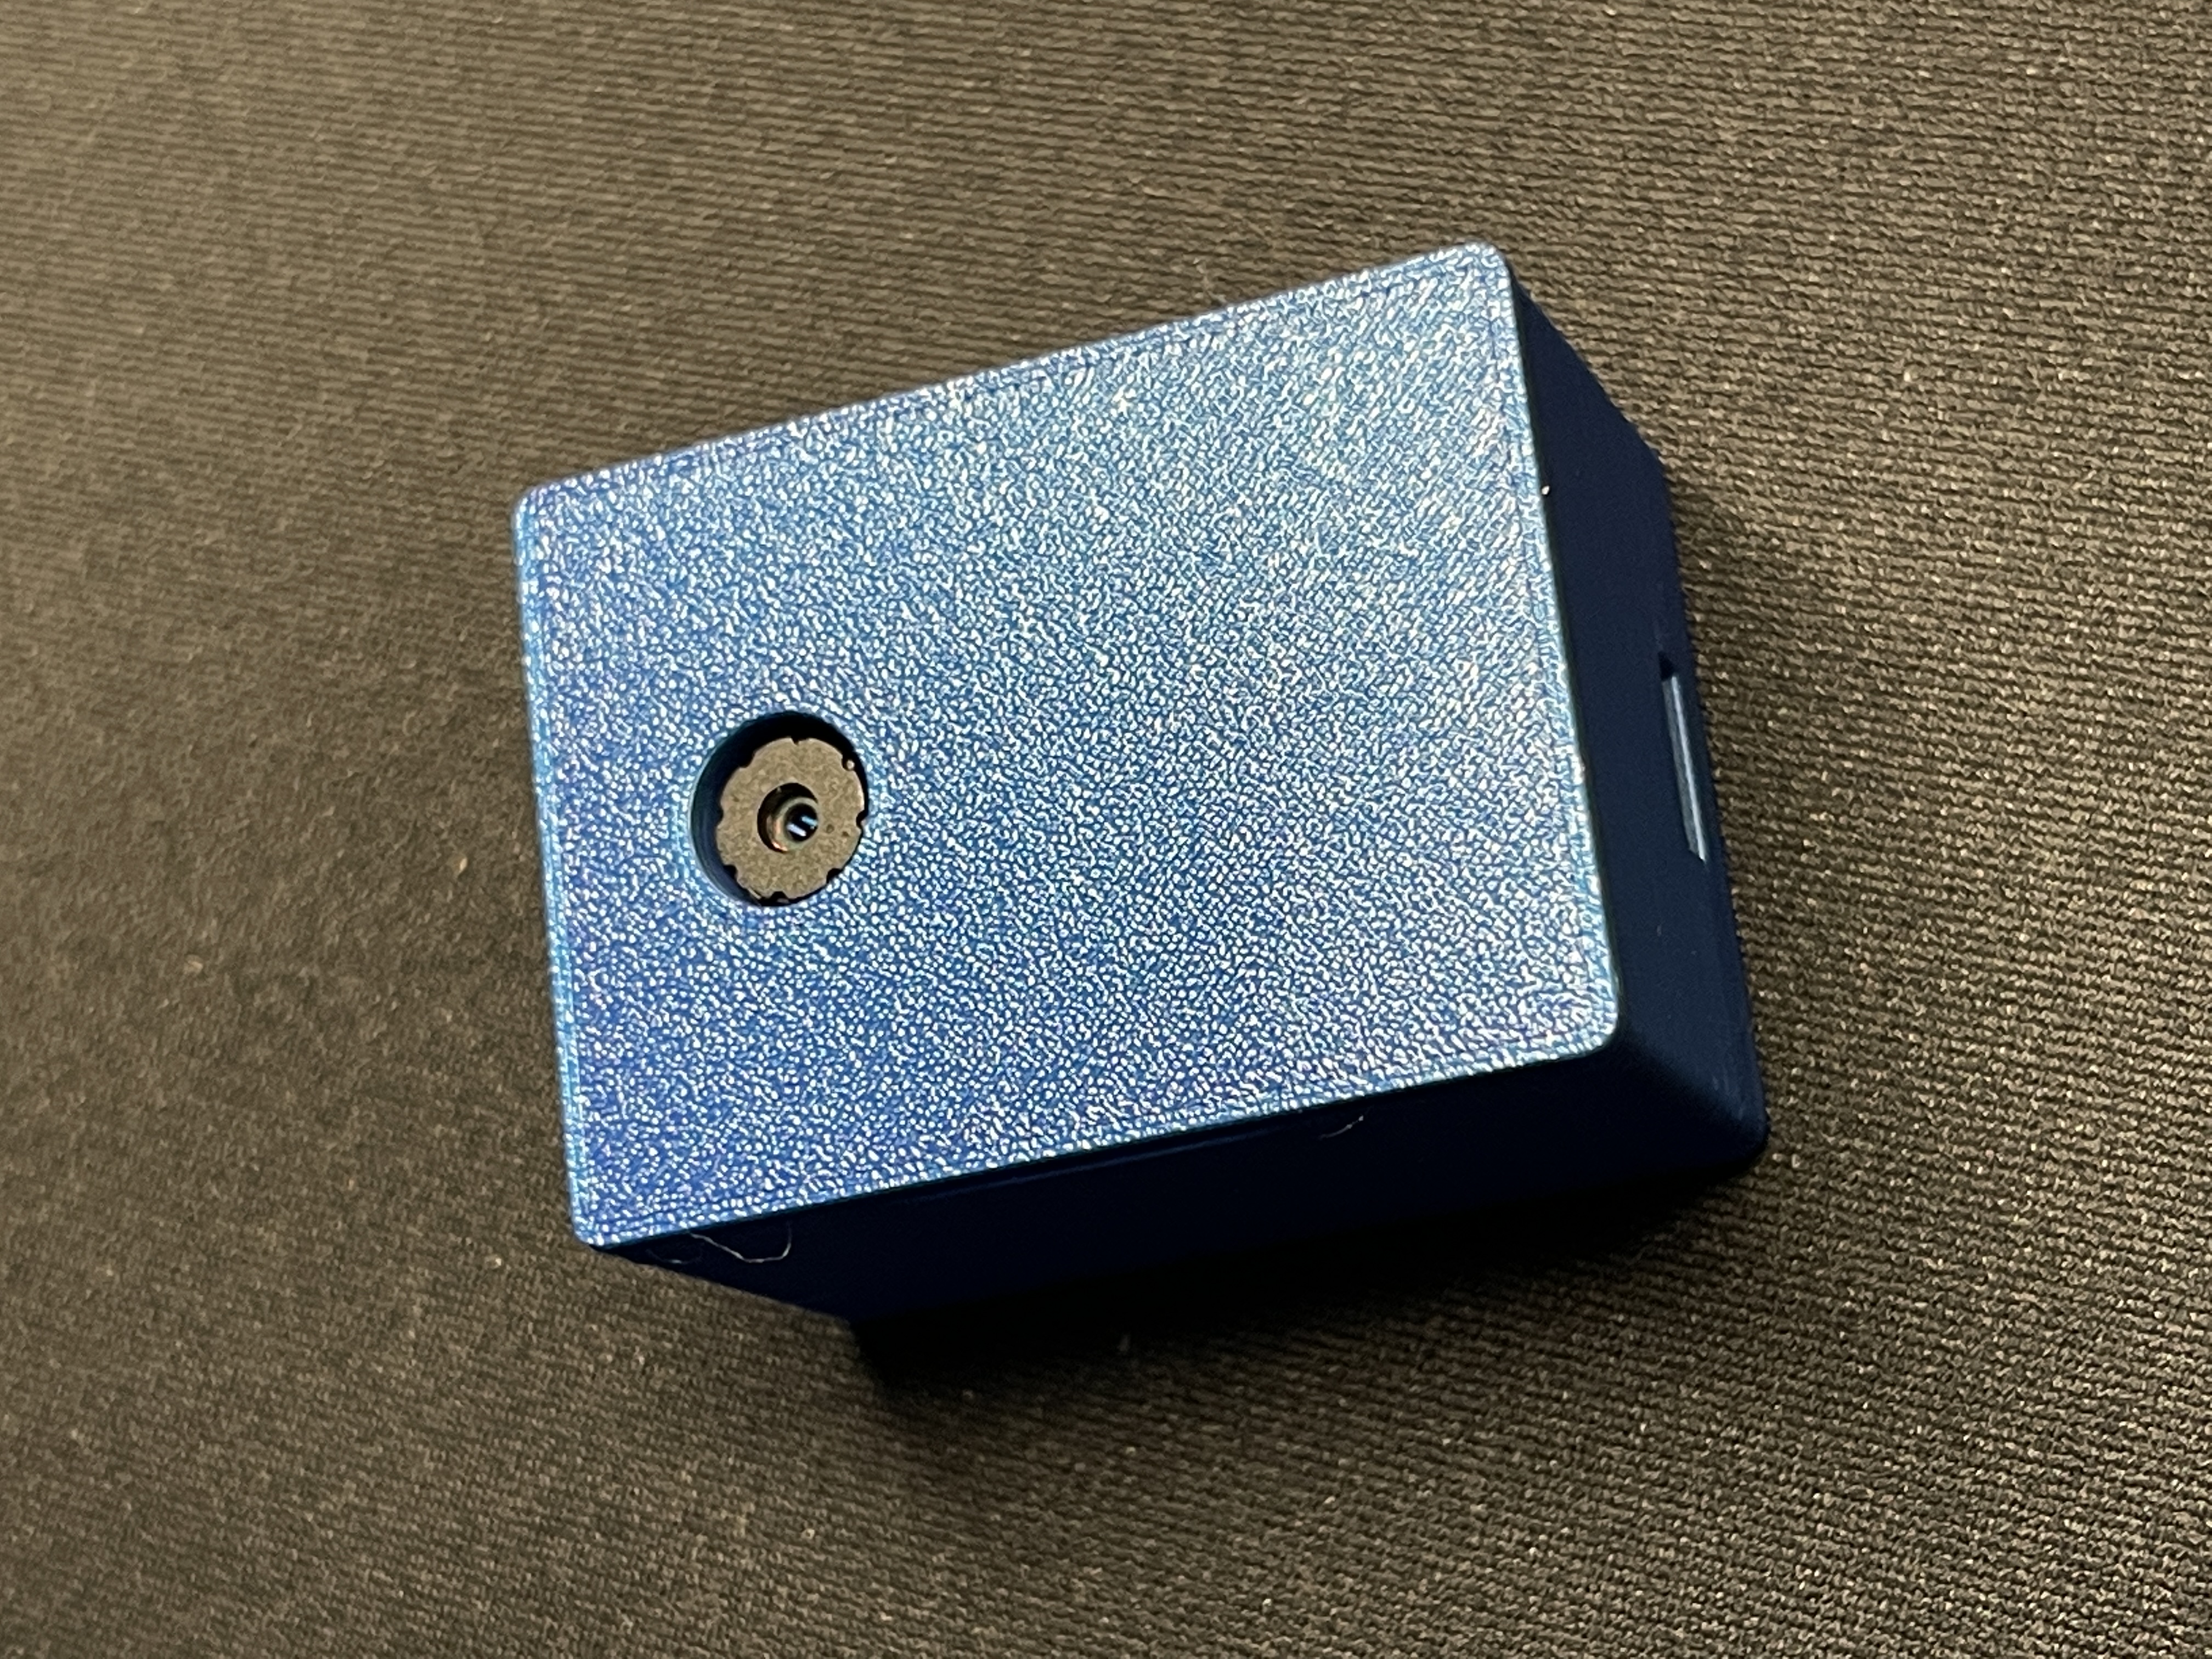 ESP32 Camera Case for OV2640 and USB-TTL Module